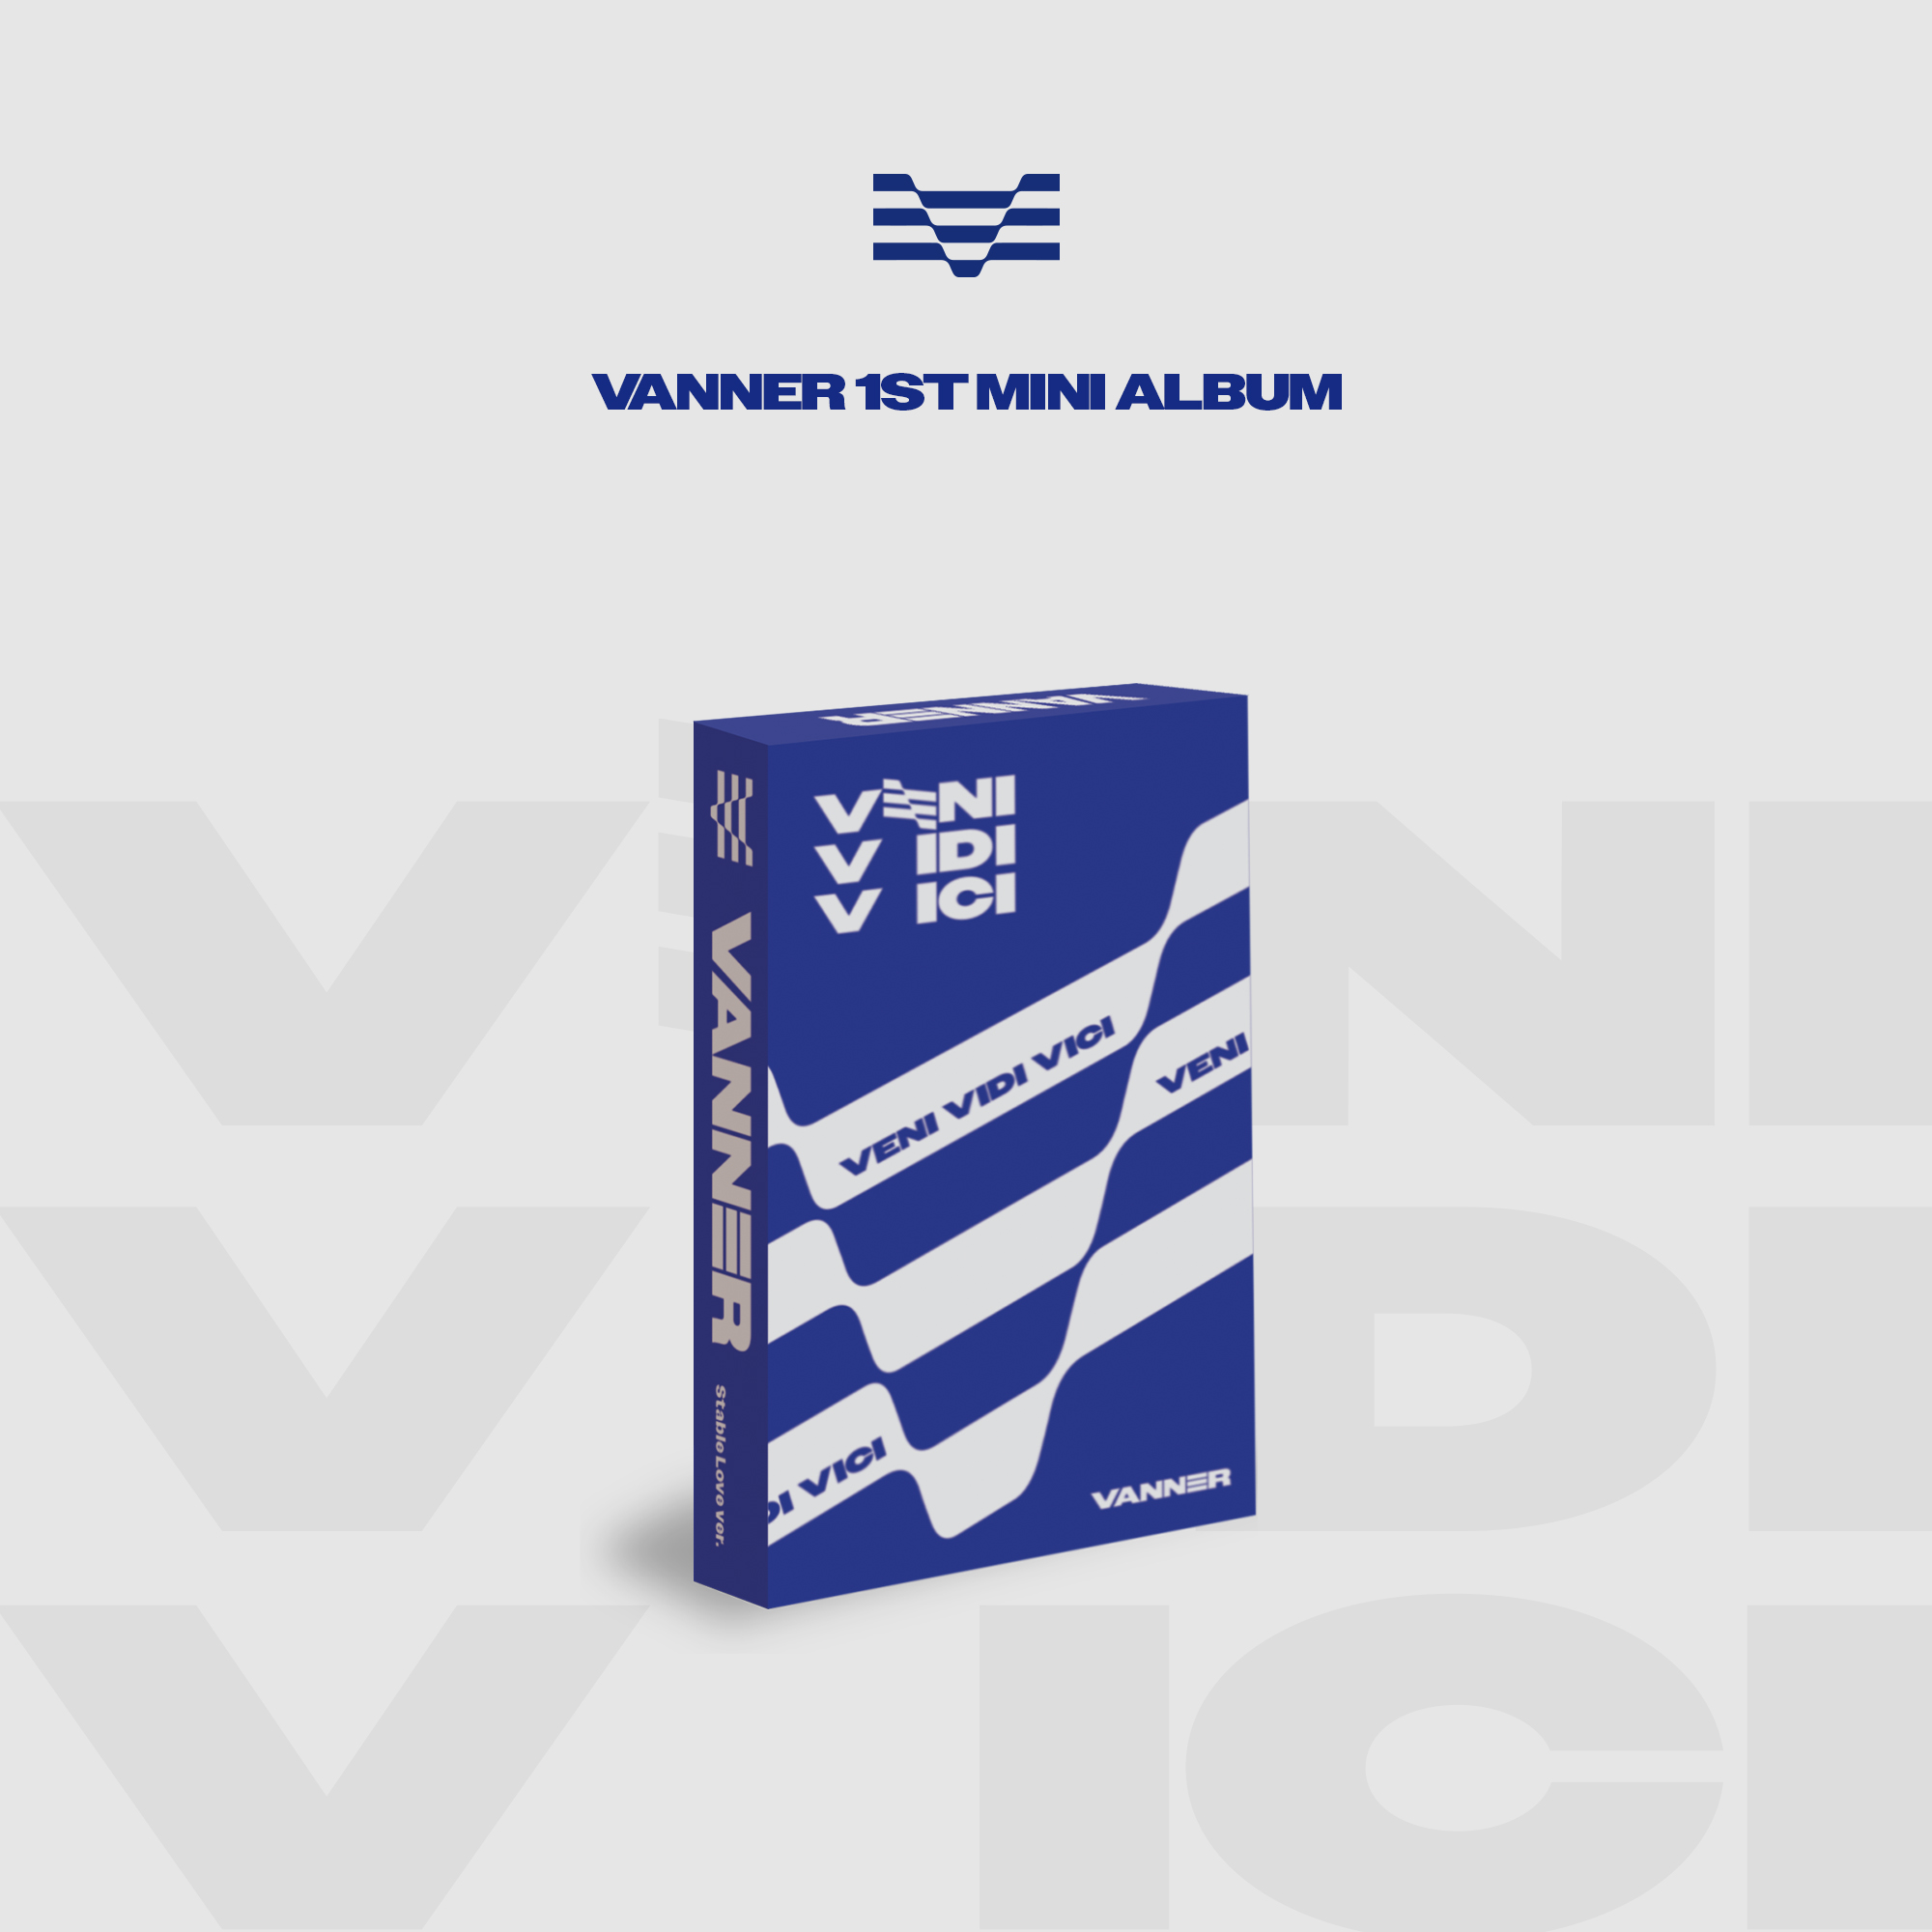 [全款 裸专] VANNER - 迷你1辑 [VENI VIDI VICI] (PLVE Ver.)_Vanner_vvs_hk